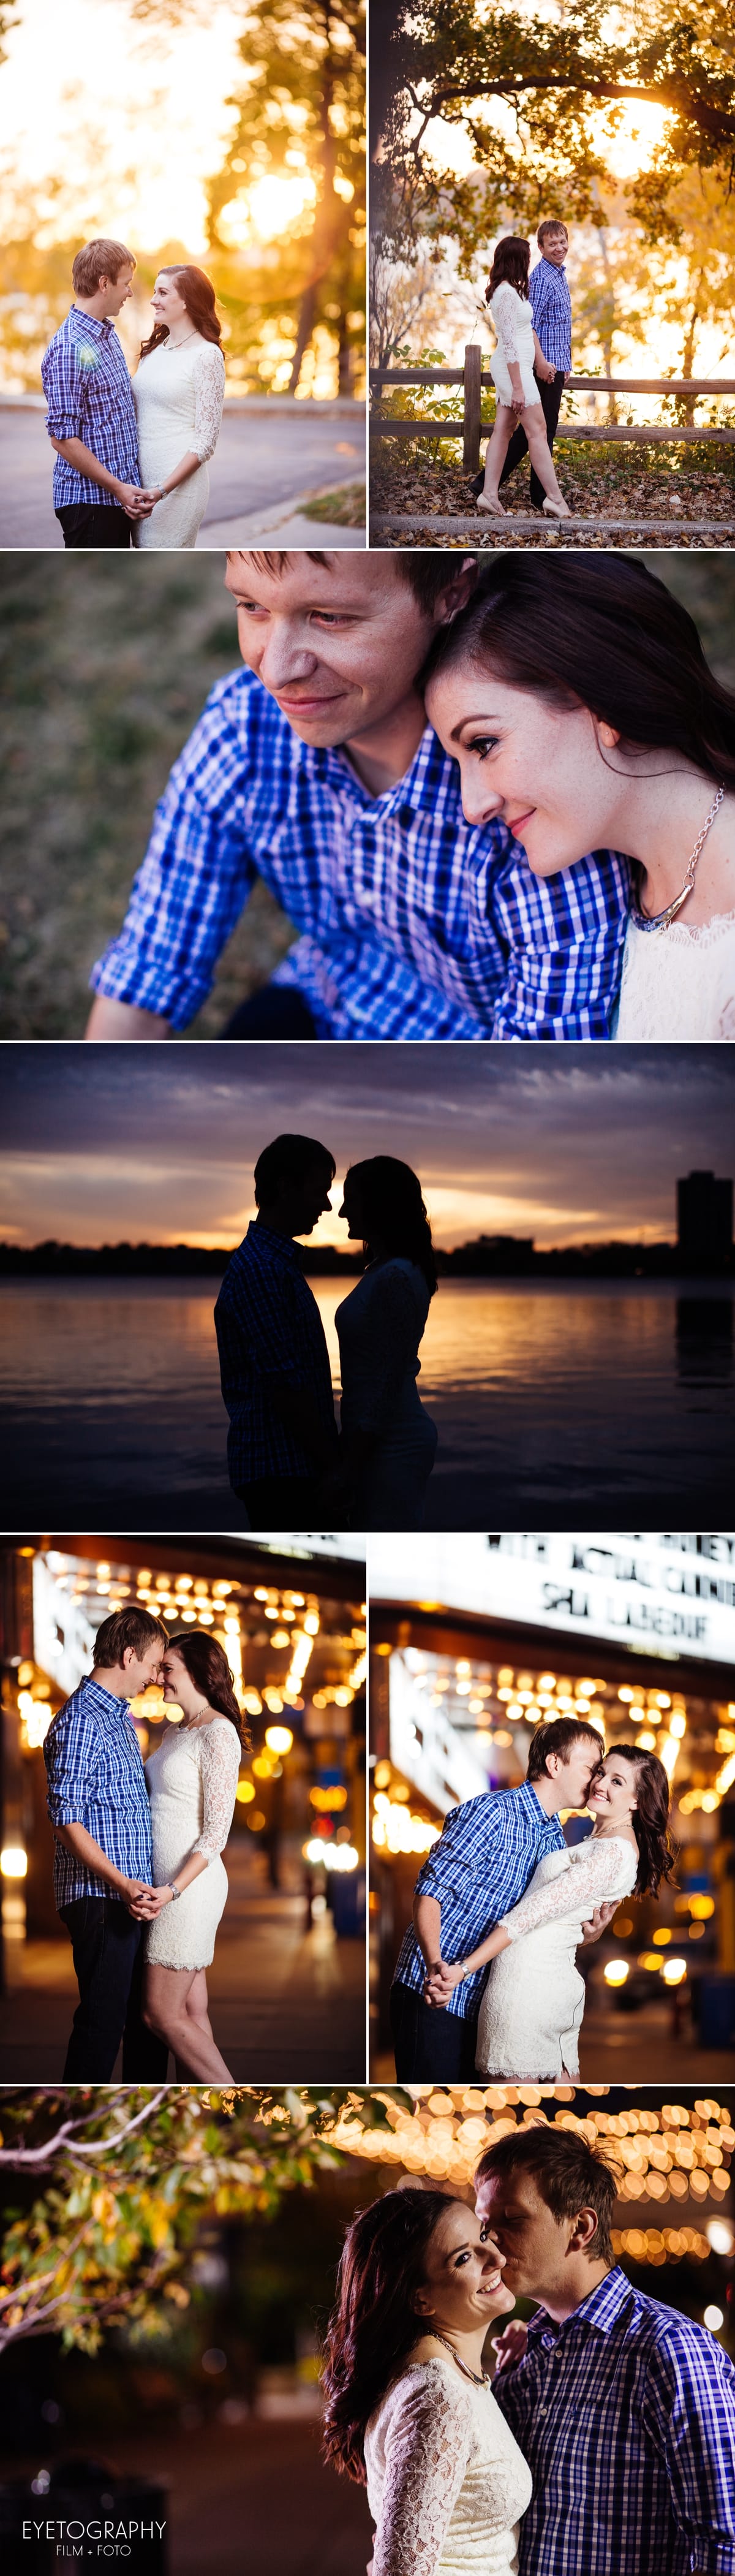 Minneapolis Fall Engagement Photography | Jaimie + Dan | Eyetography FIlm + Foto 6